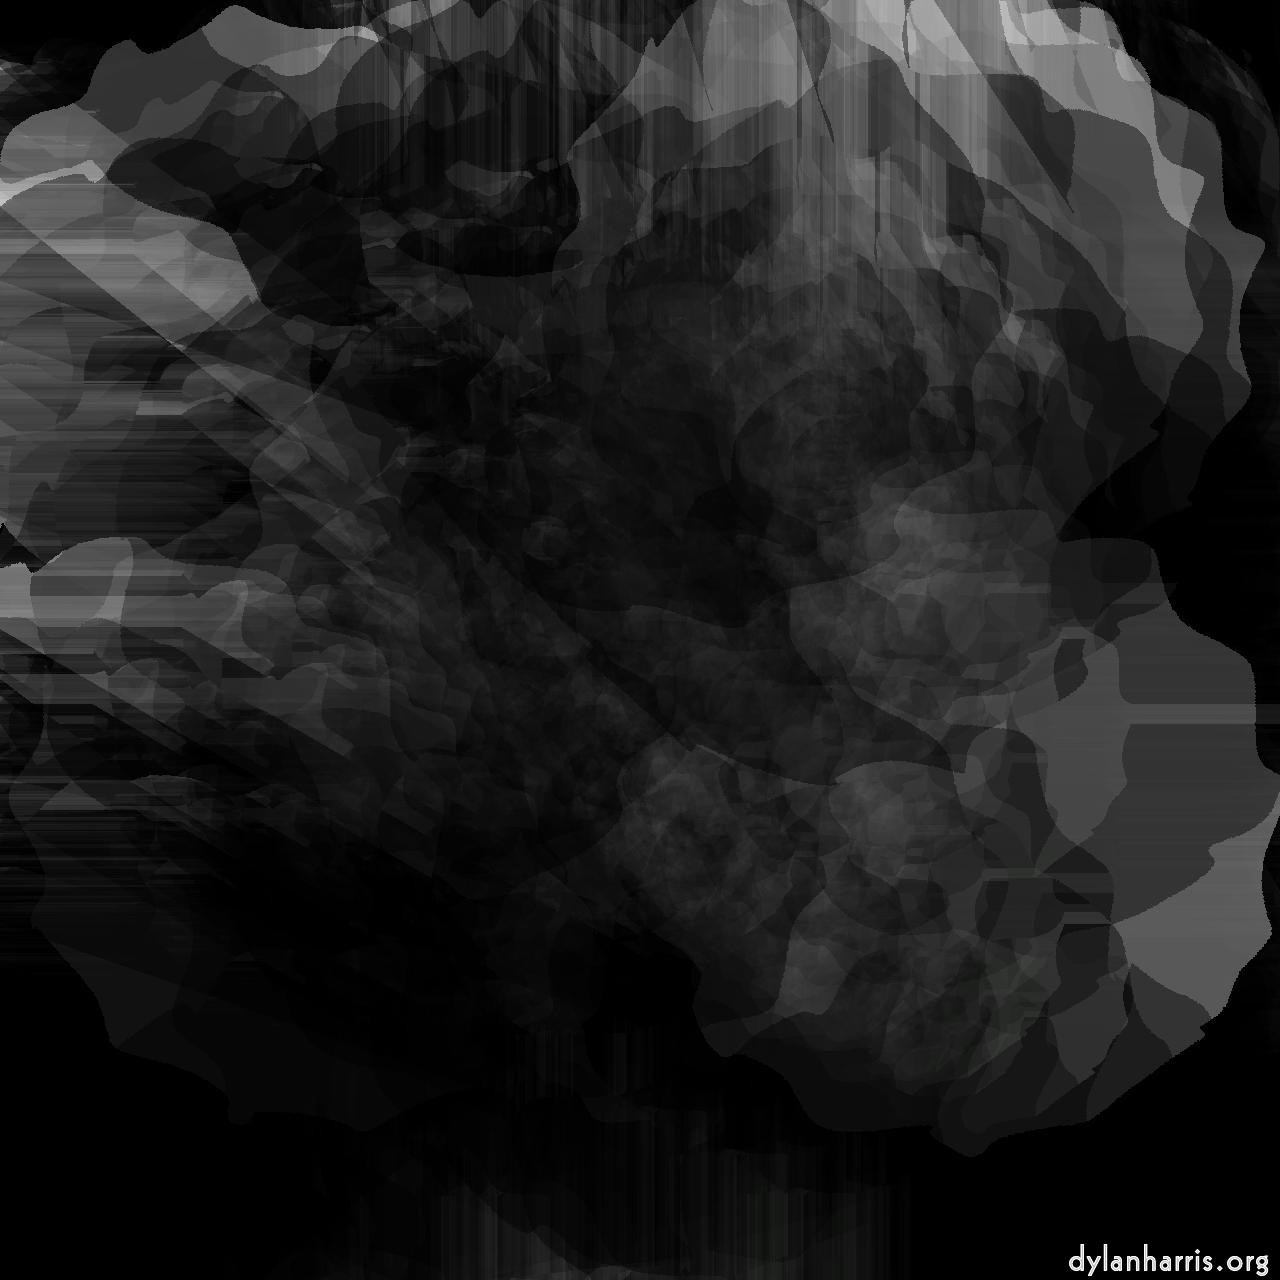 image: grunge - chopped - mutilated - warped :: fractal shapes 2